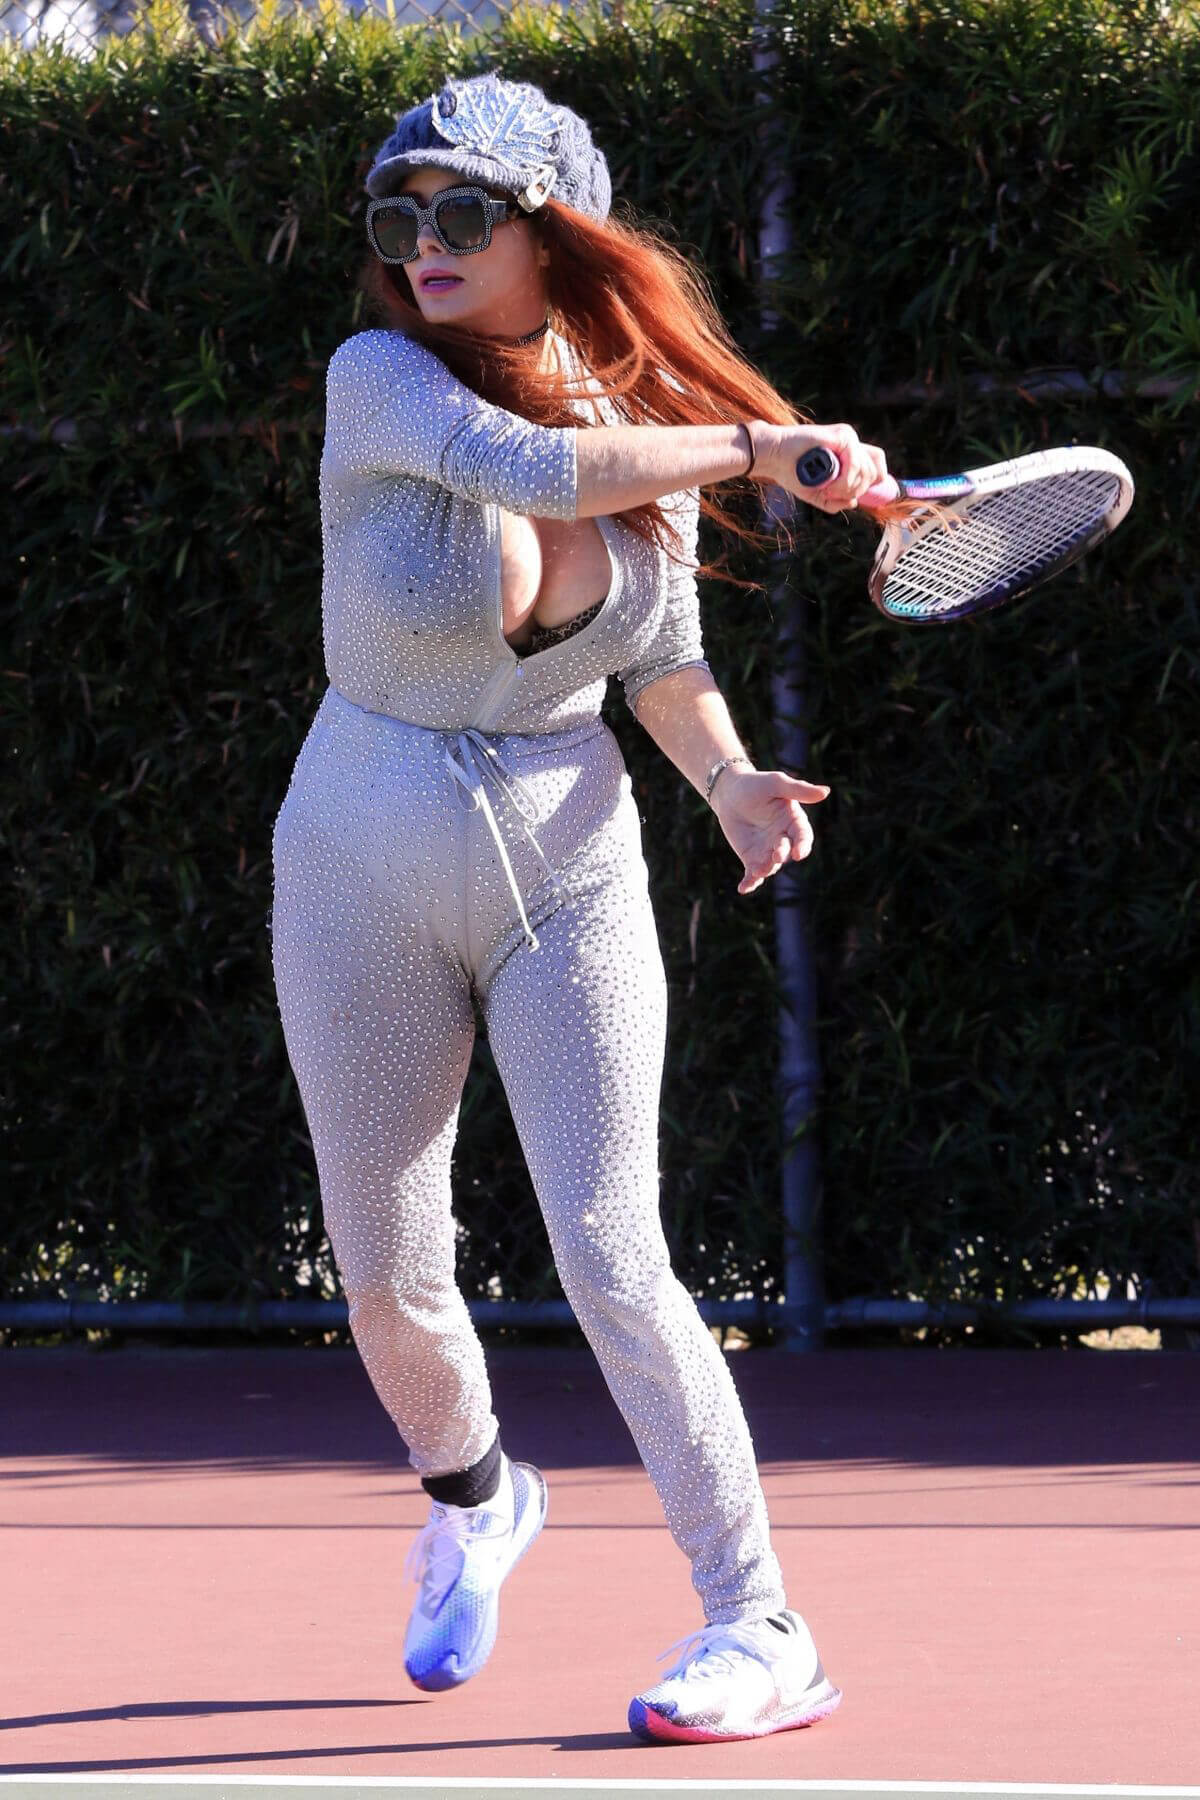 Phoebe Price Plays Tennis at Tennis Court in Los Angeles 02/23/2021 5